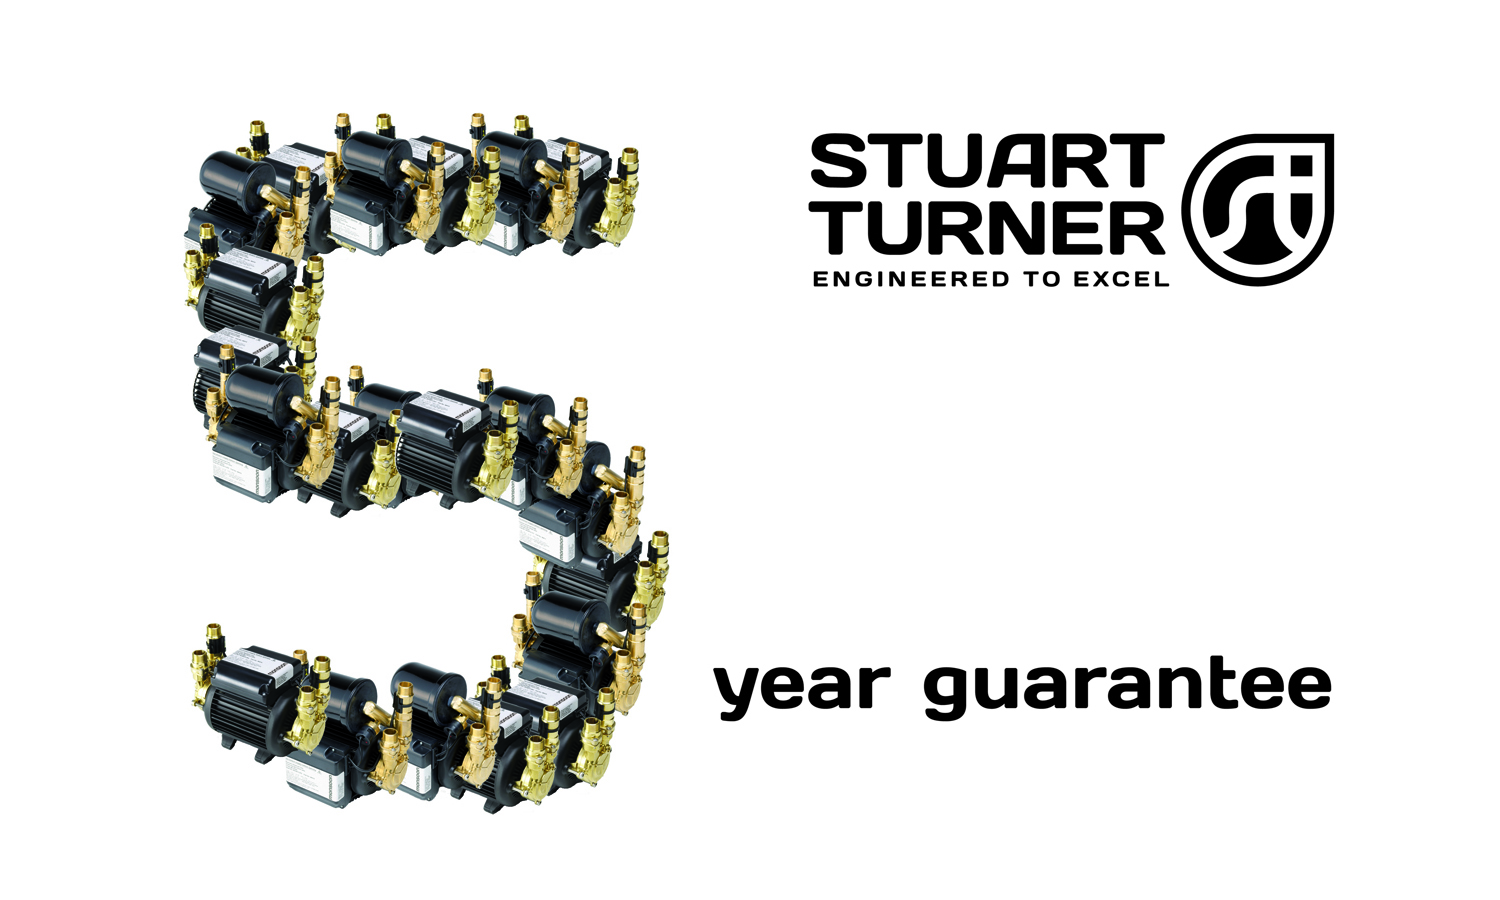 Increased guarantees from Stuart Turner